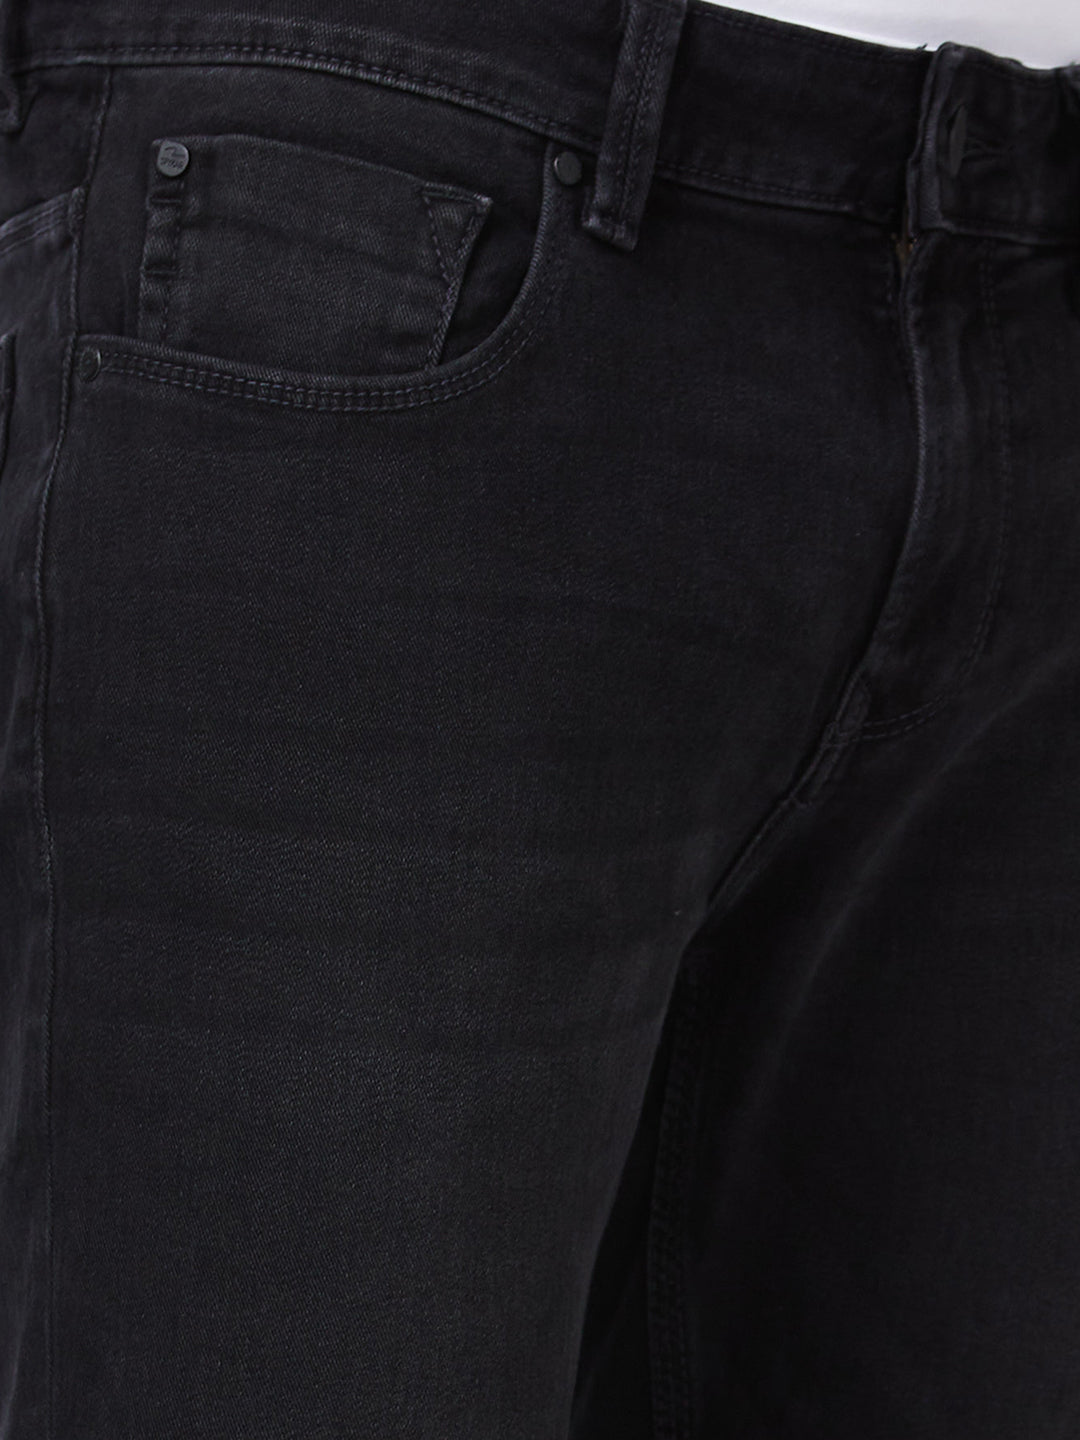 Spykar Mid Rise Slim Fit Tapered Length Black Jeans For Men